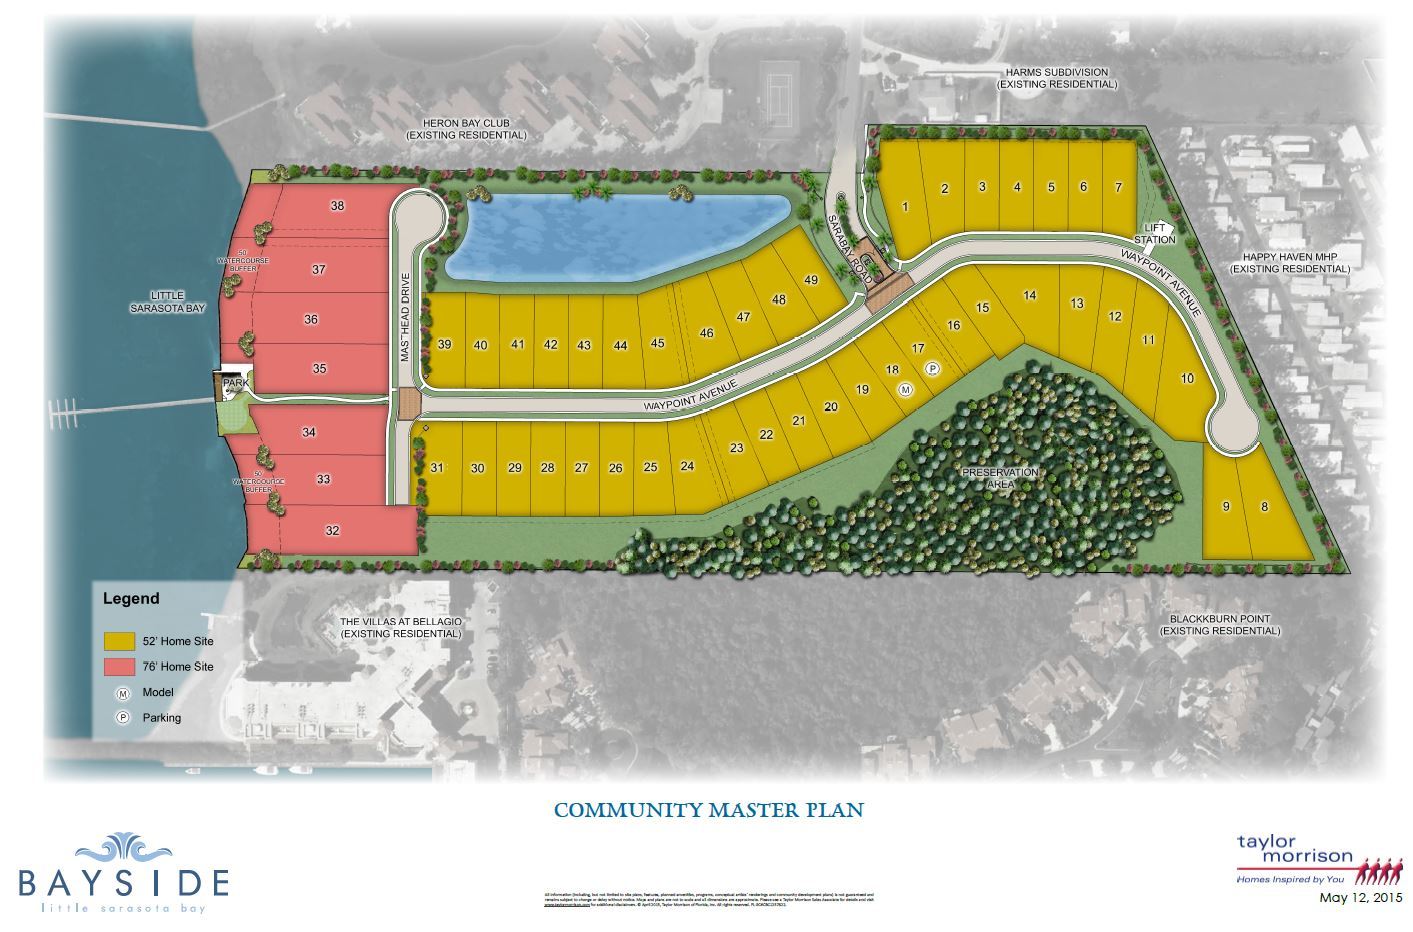 The Bayside community master plan, courtesy of Taylor Morrison.